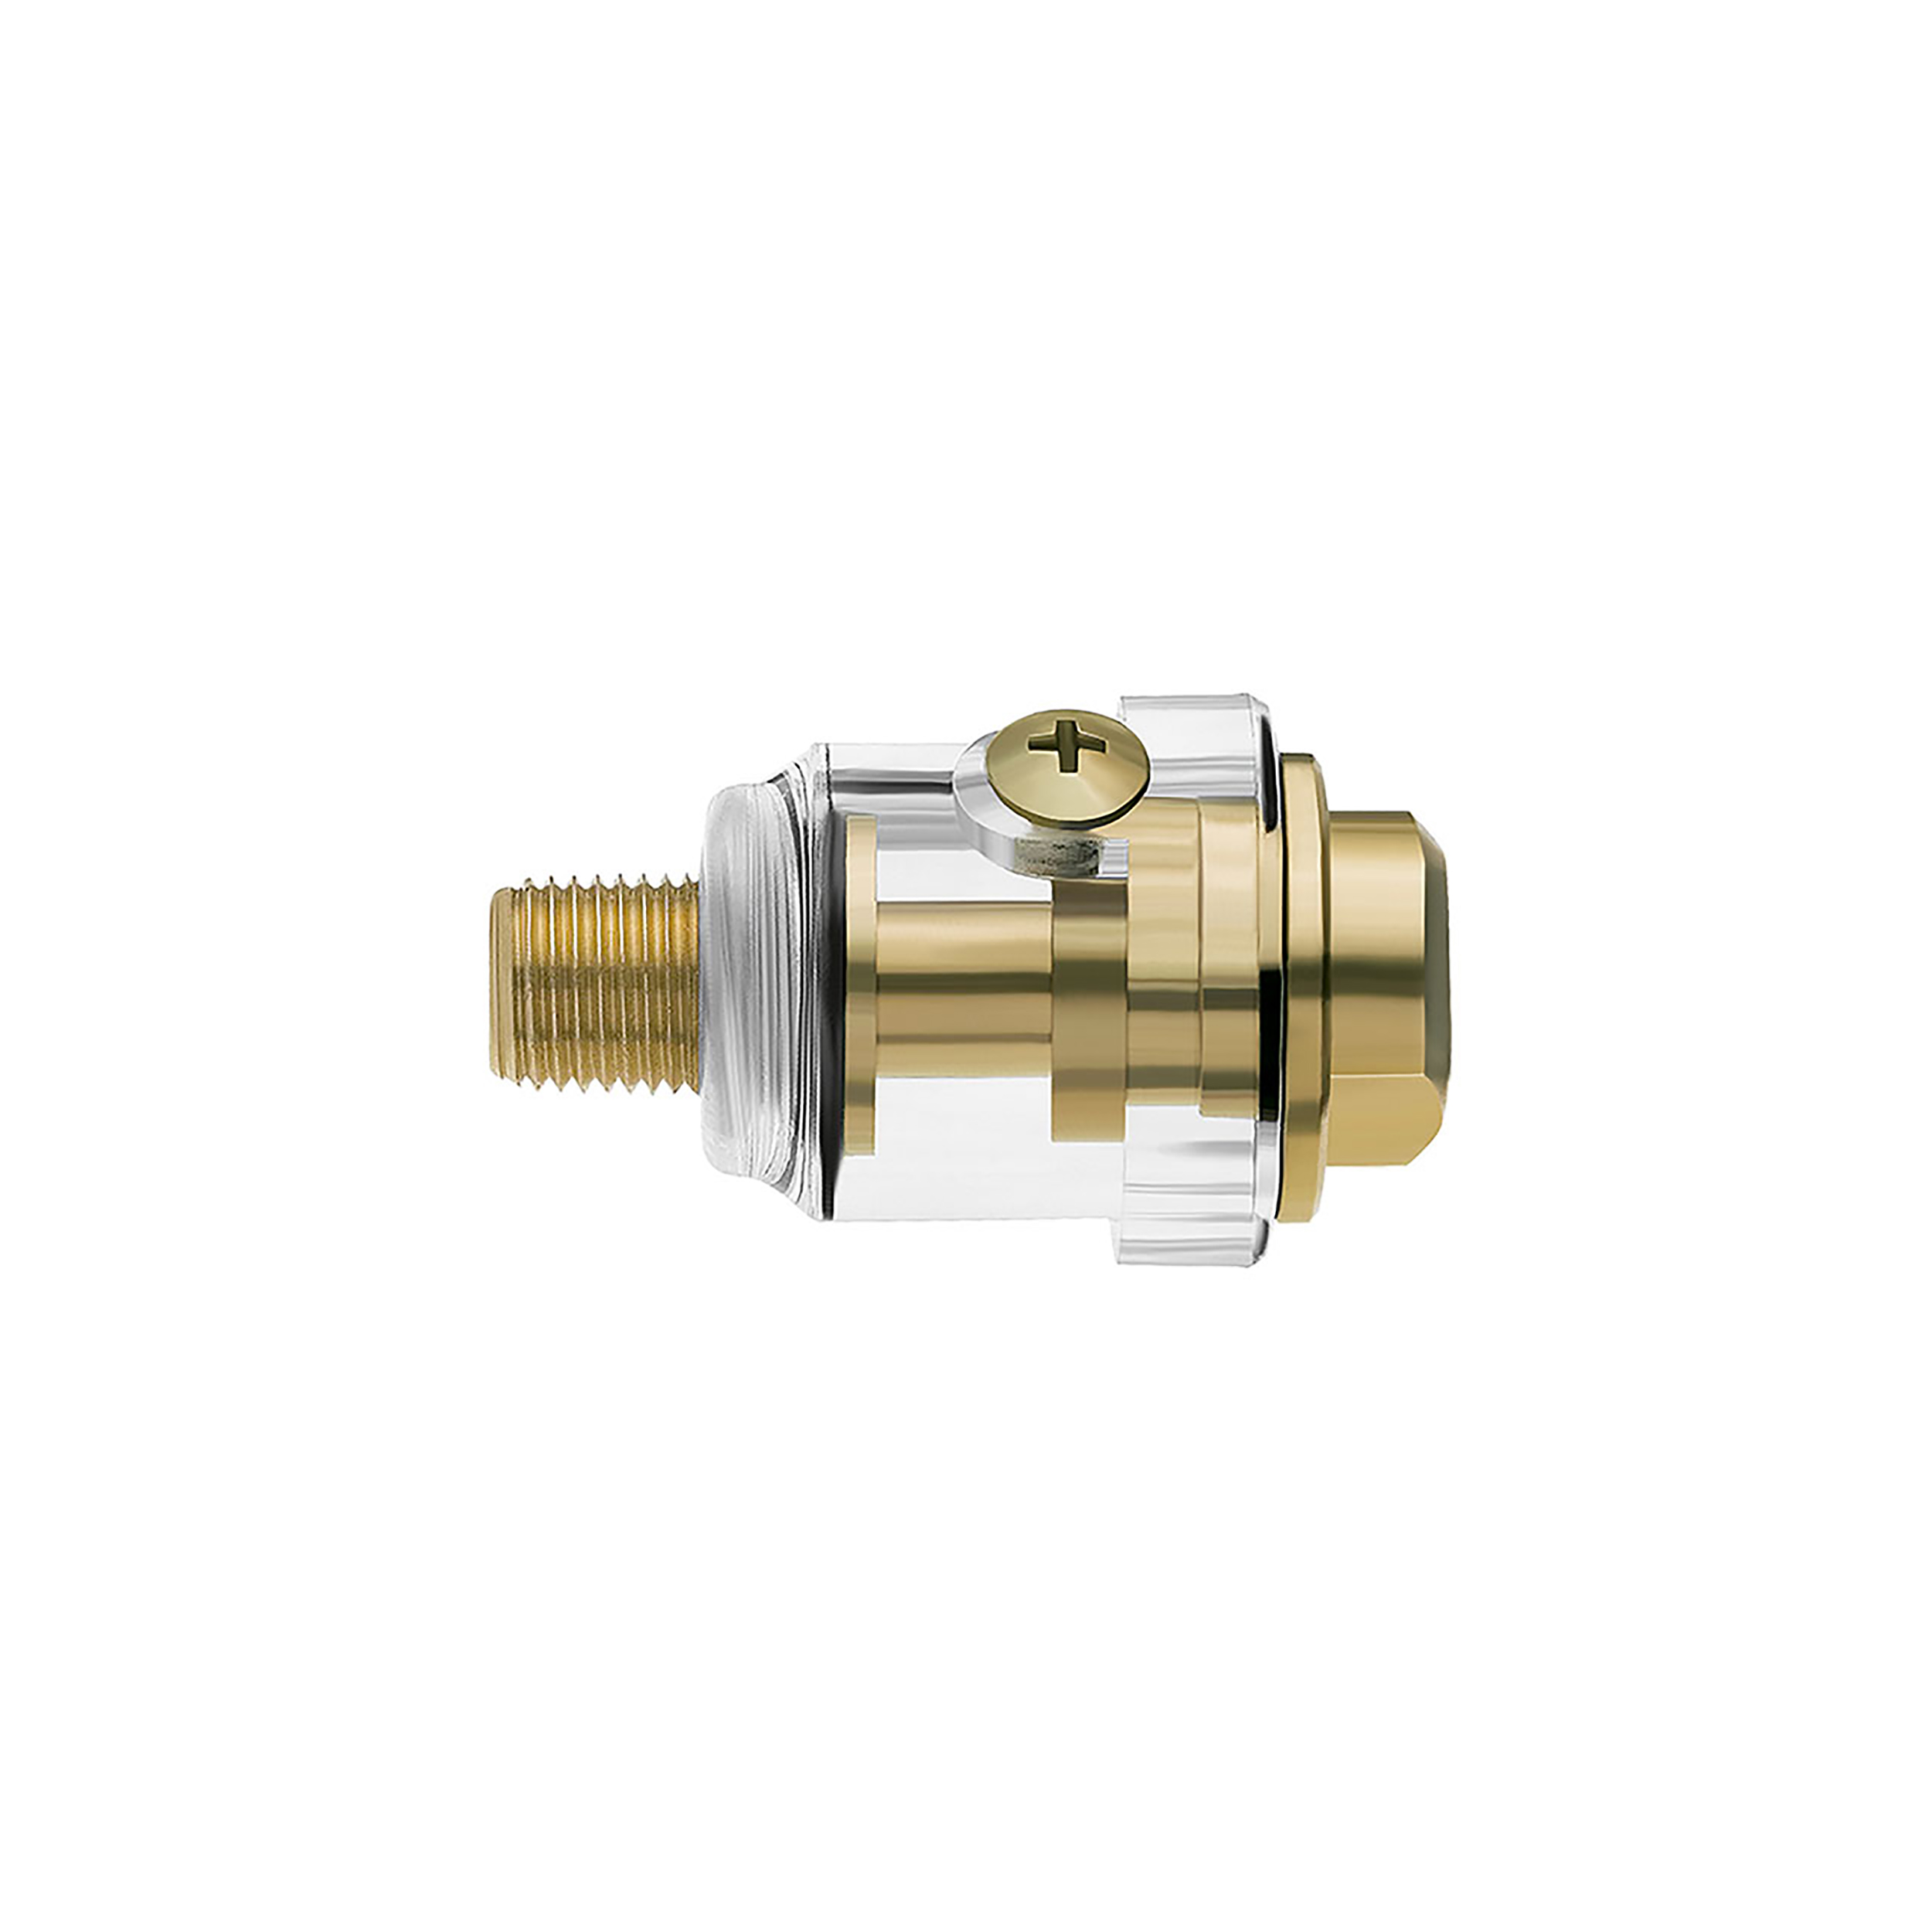 Compressed air auxiliary oiler, M 1/4", MATADOR item no.: 70050014